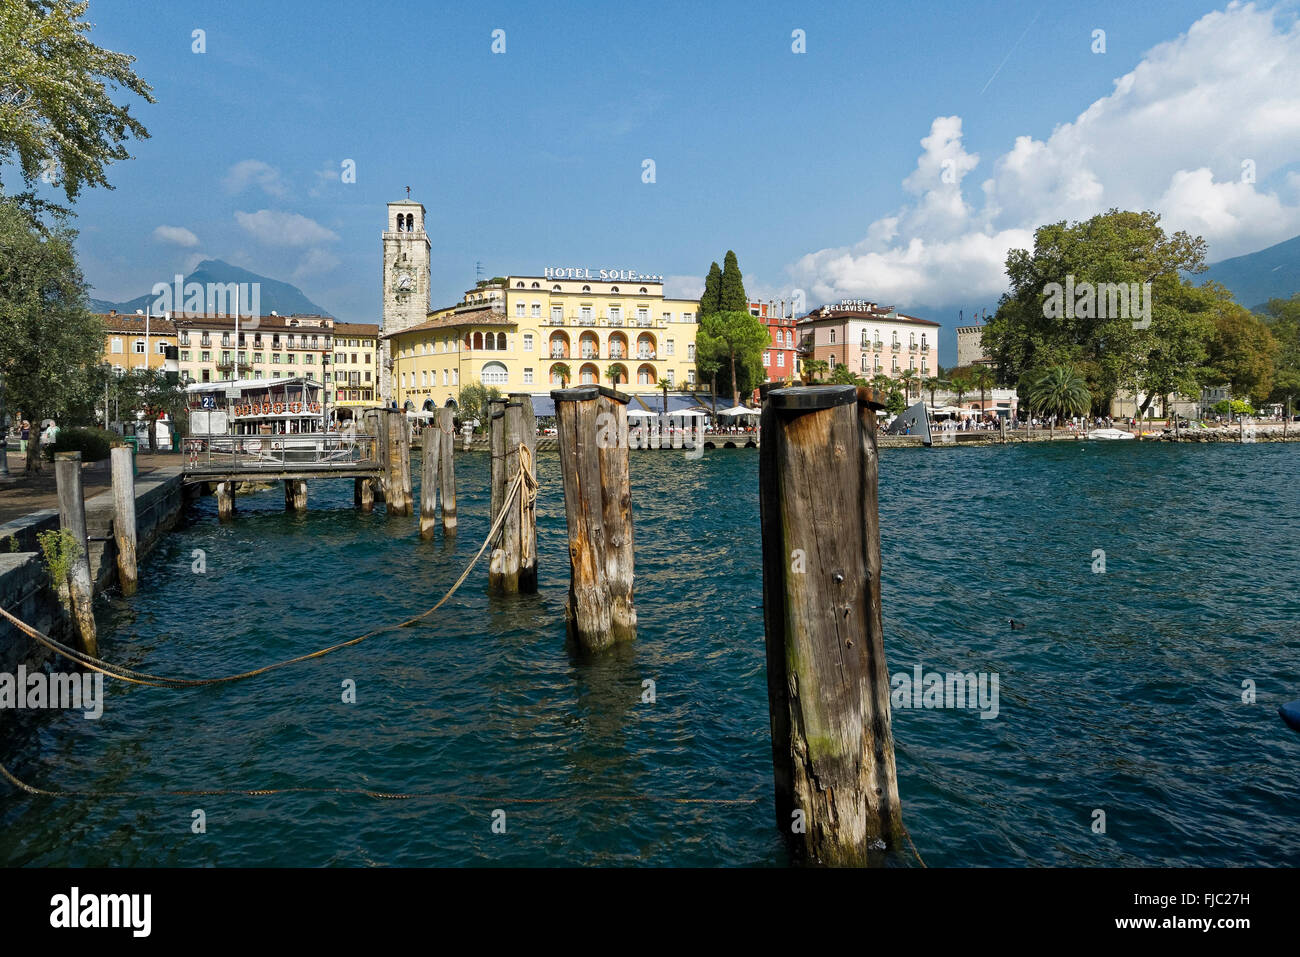 Hafen, Riva del Garda, Gardasee, Trentino, Italien | harbour, Riva del Garda, Lake Garda, Trentino, Italy Stock Photo